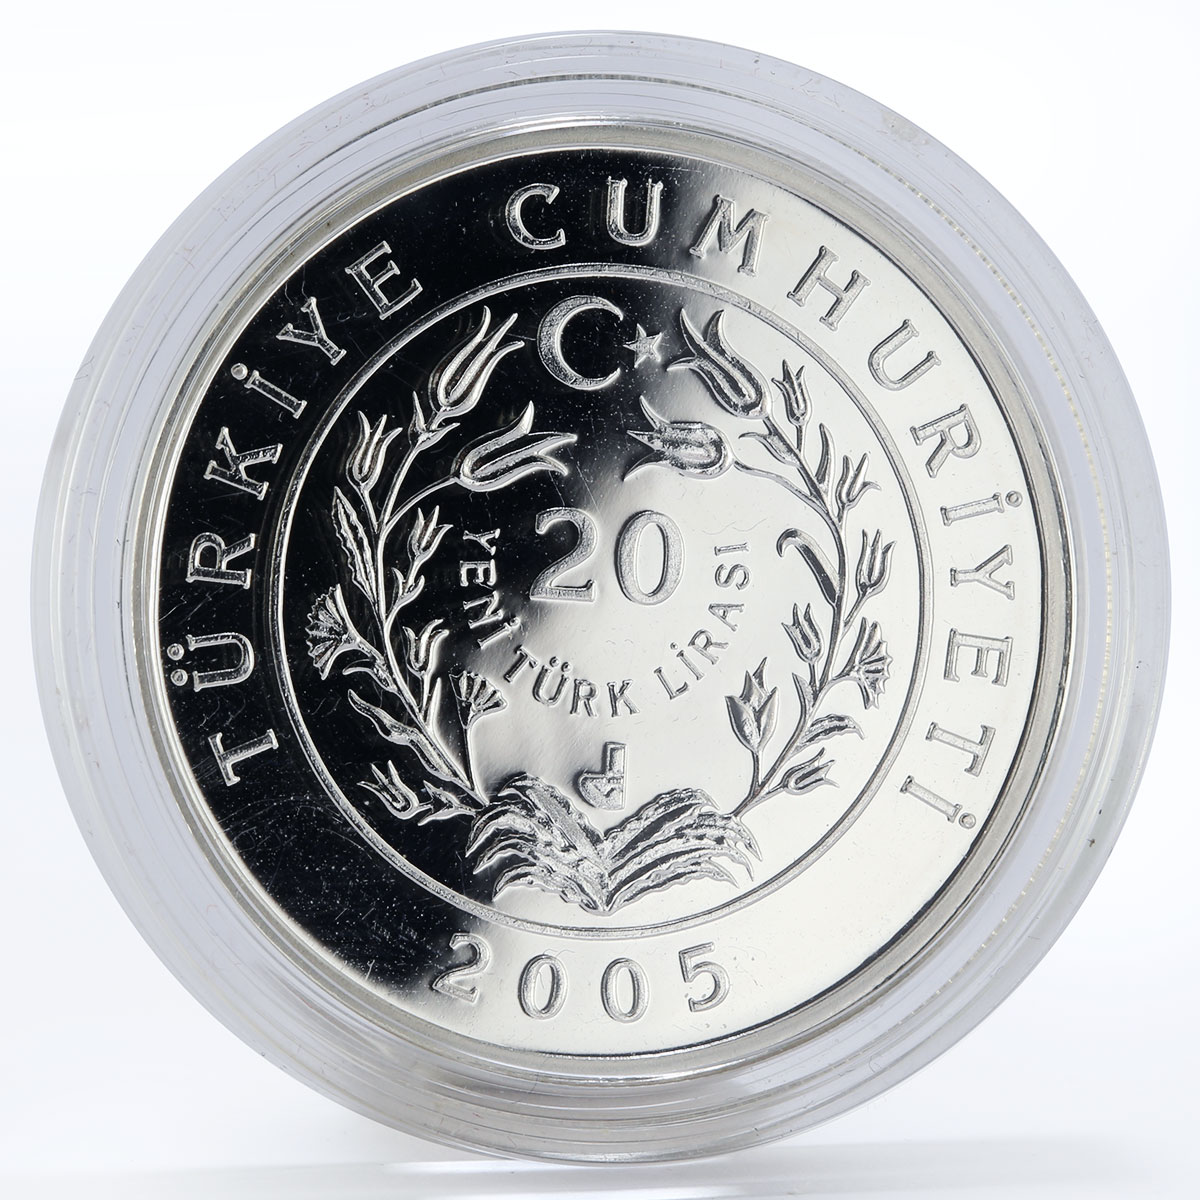 Turkey 20 lira Five-toed Jerboa animal proof silver coin 2005